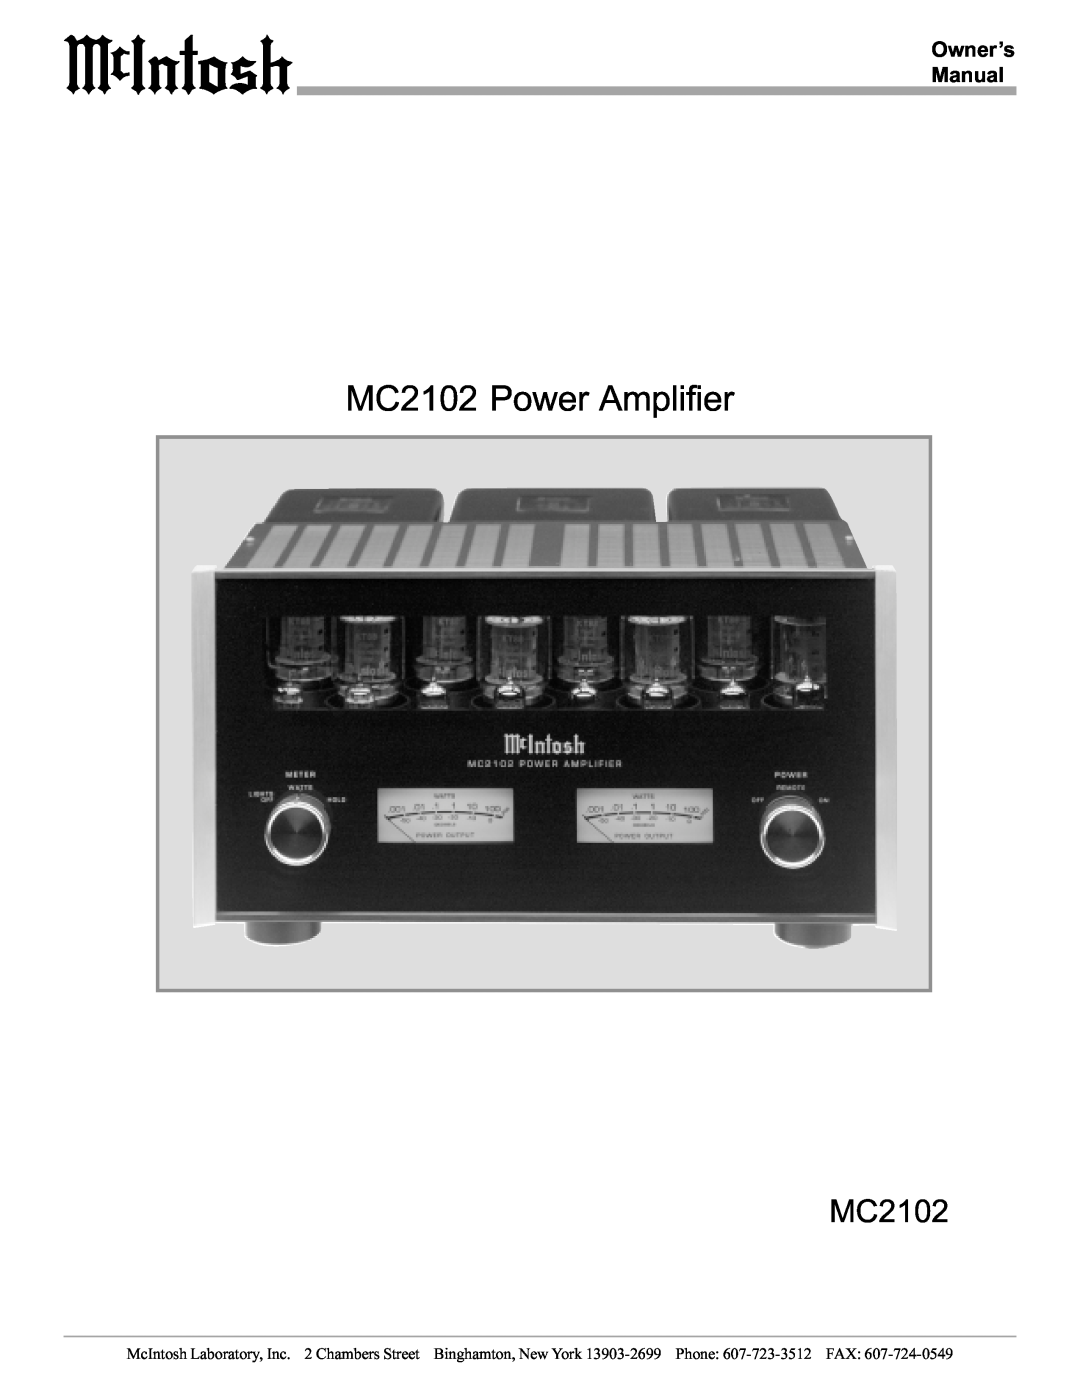 McIntosh manual MC2102 Power Amplifier 